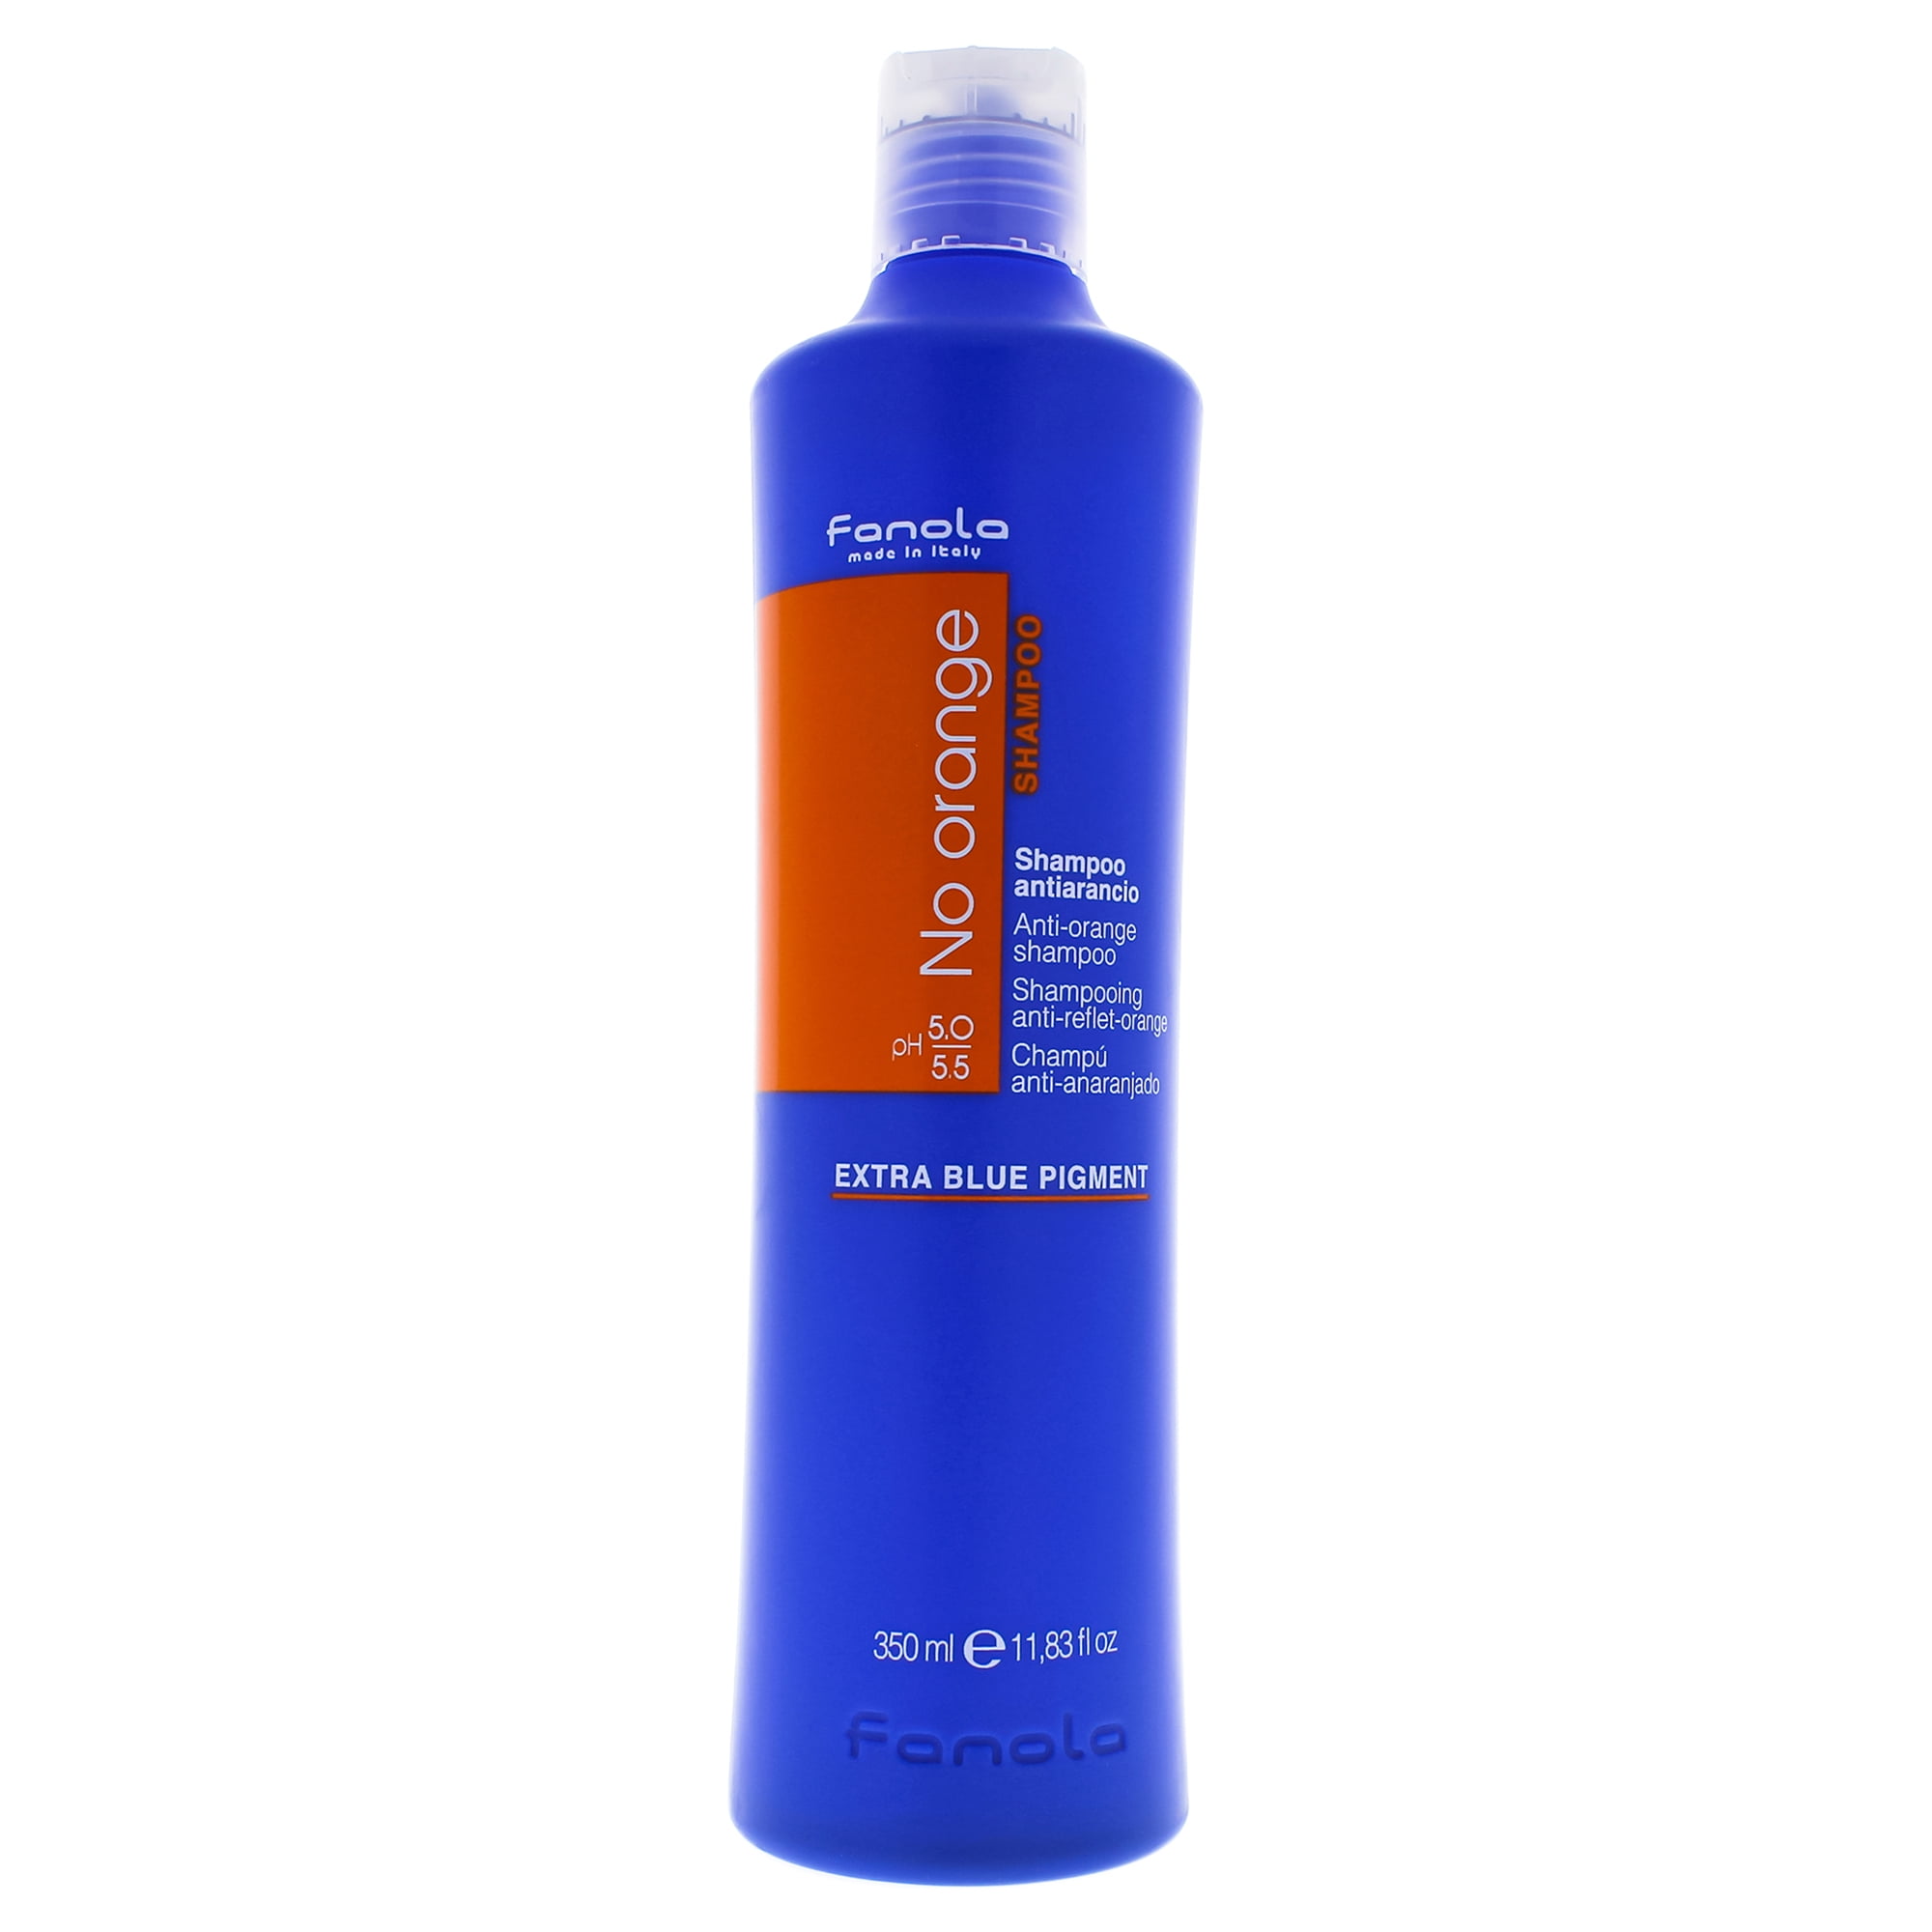 Fanola Orange Shampoo 350ml/ 11.83 oz Walmart.com